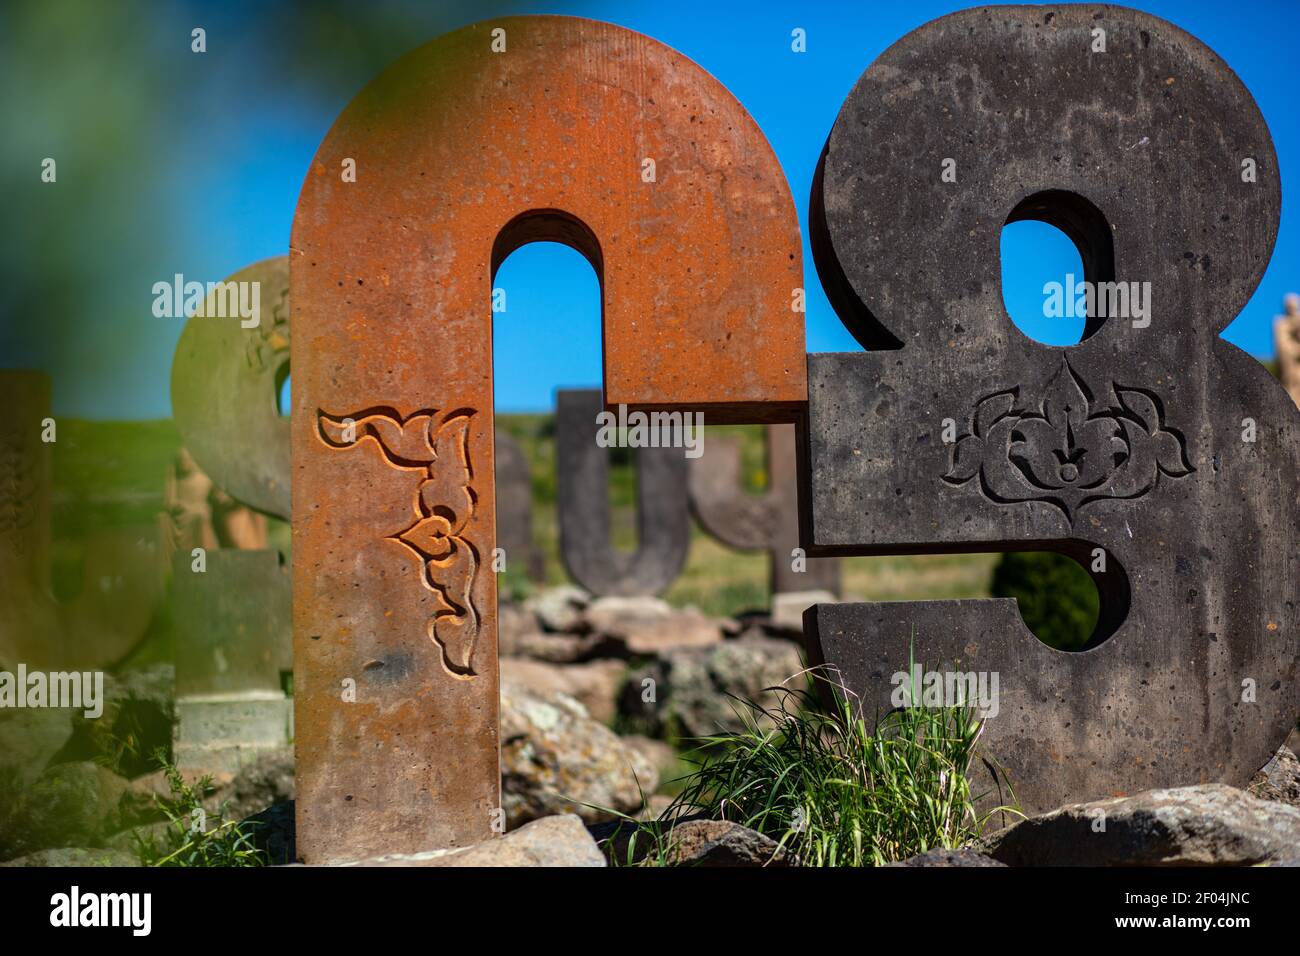 A closeup shot of the Alphabet monument in Armenia Stock Photo